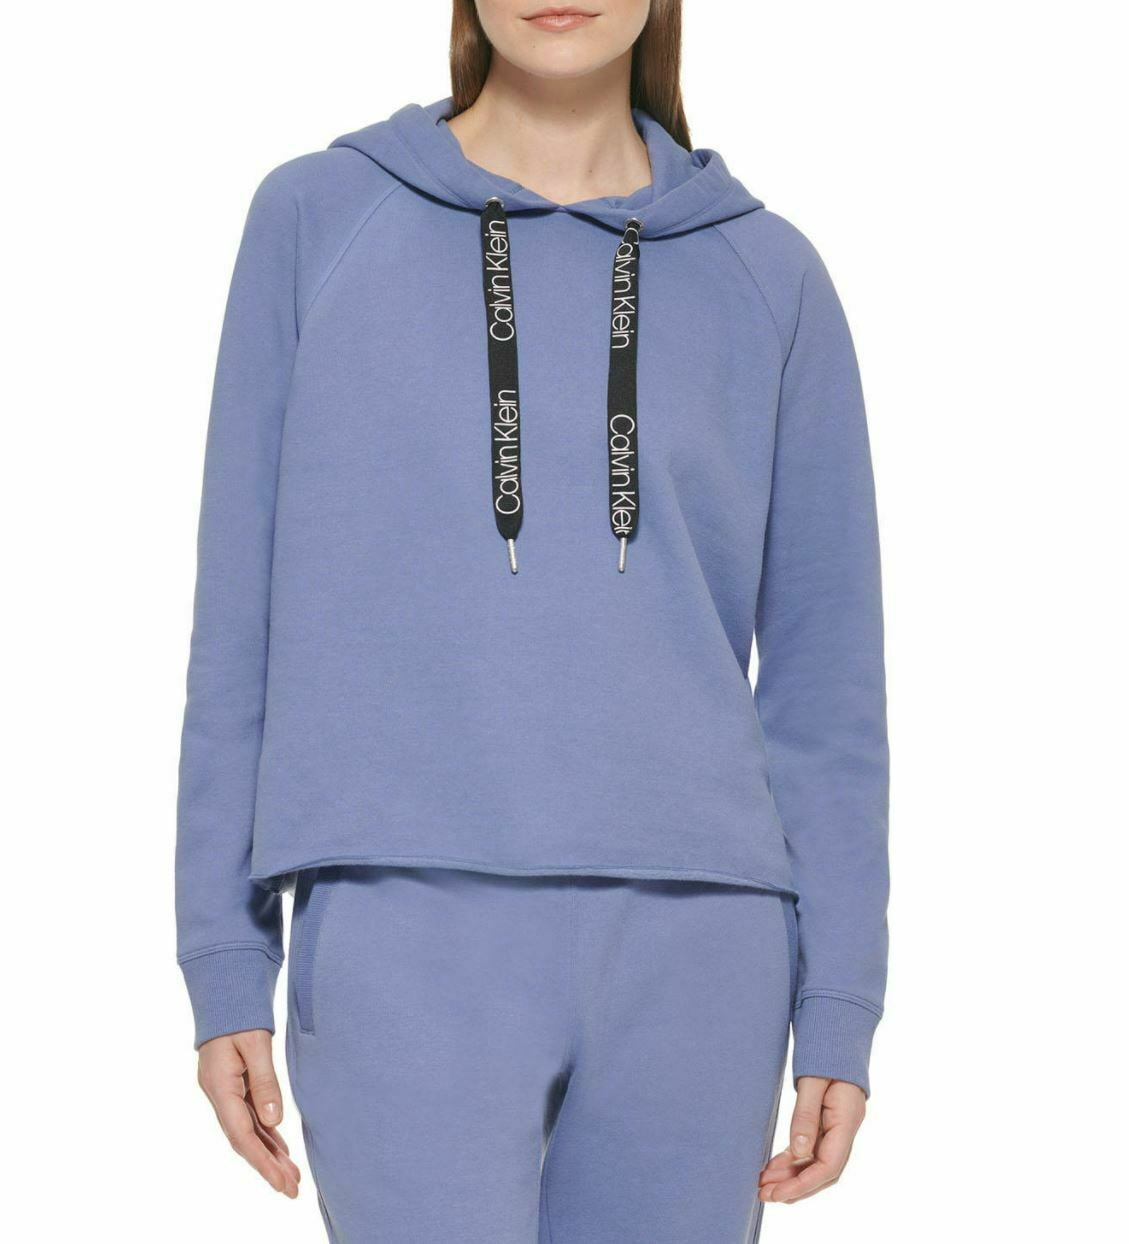 Voorstel Schuldig incompleet new CALVIN KLEIN women jacket hoodie CJMT8785 DUS blue cotton blend sz M  $59.50 - Walmart.com